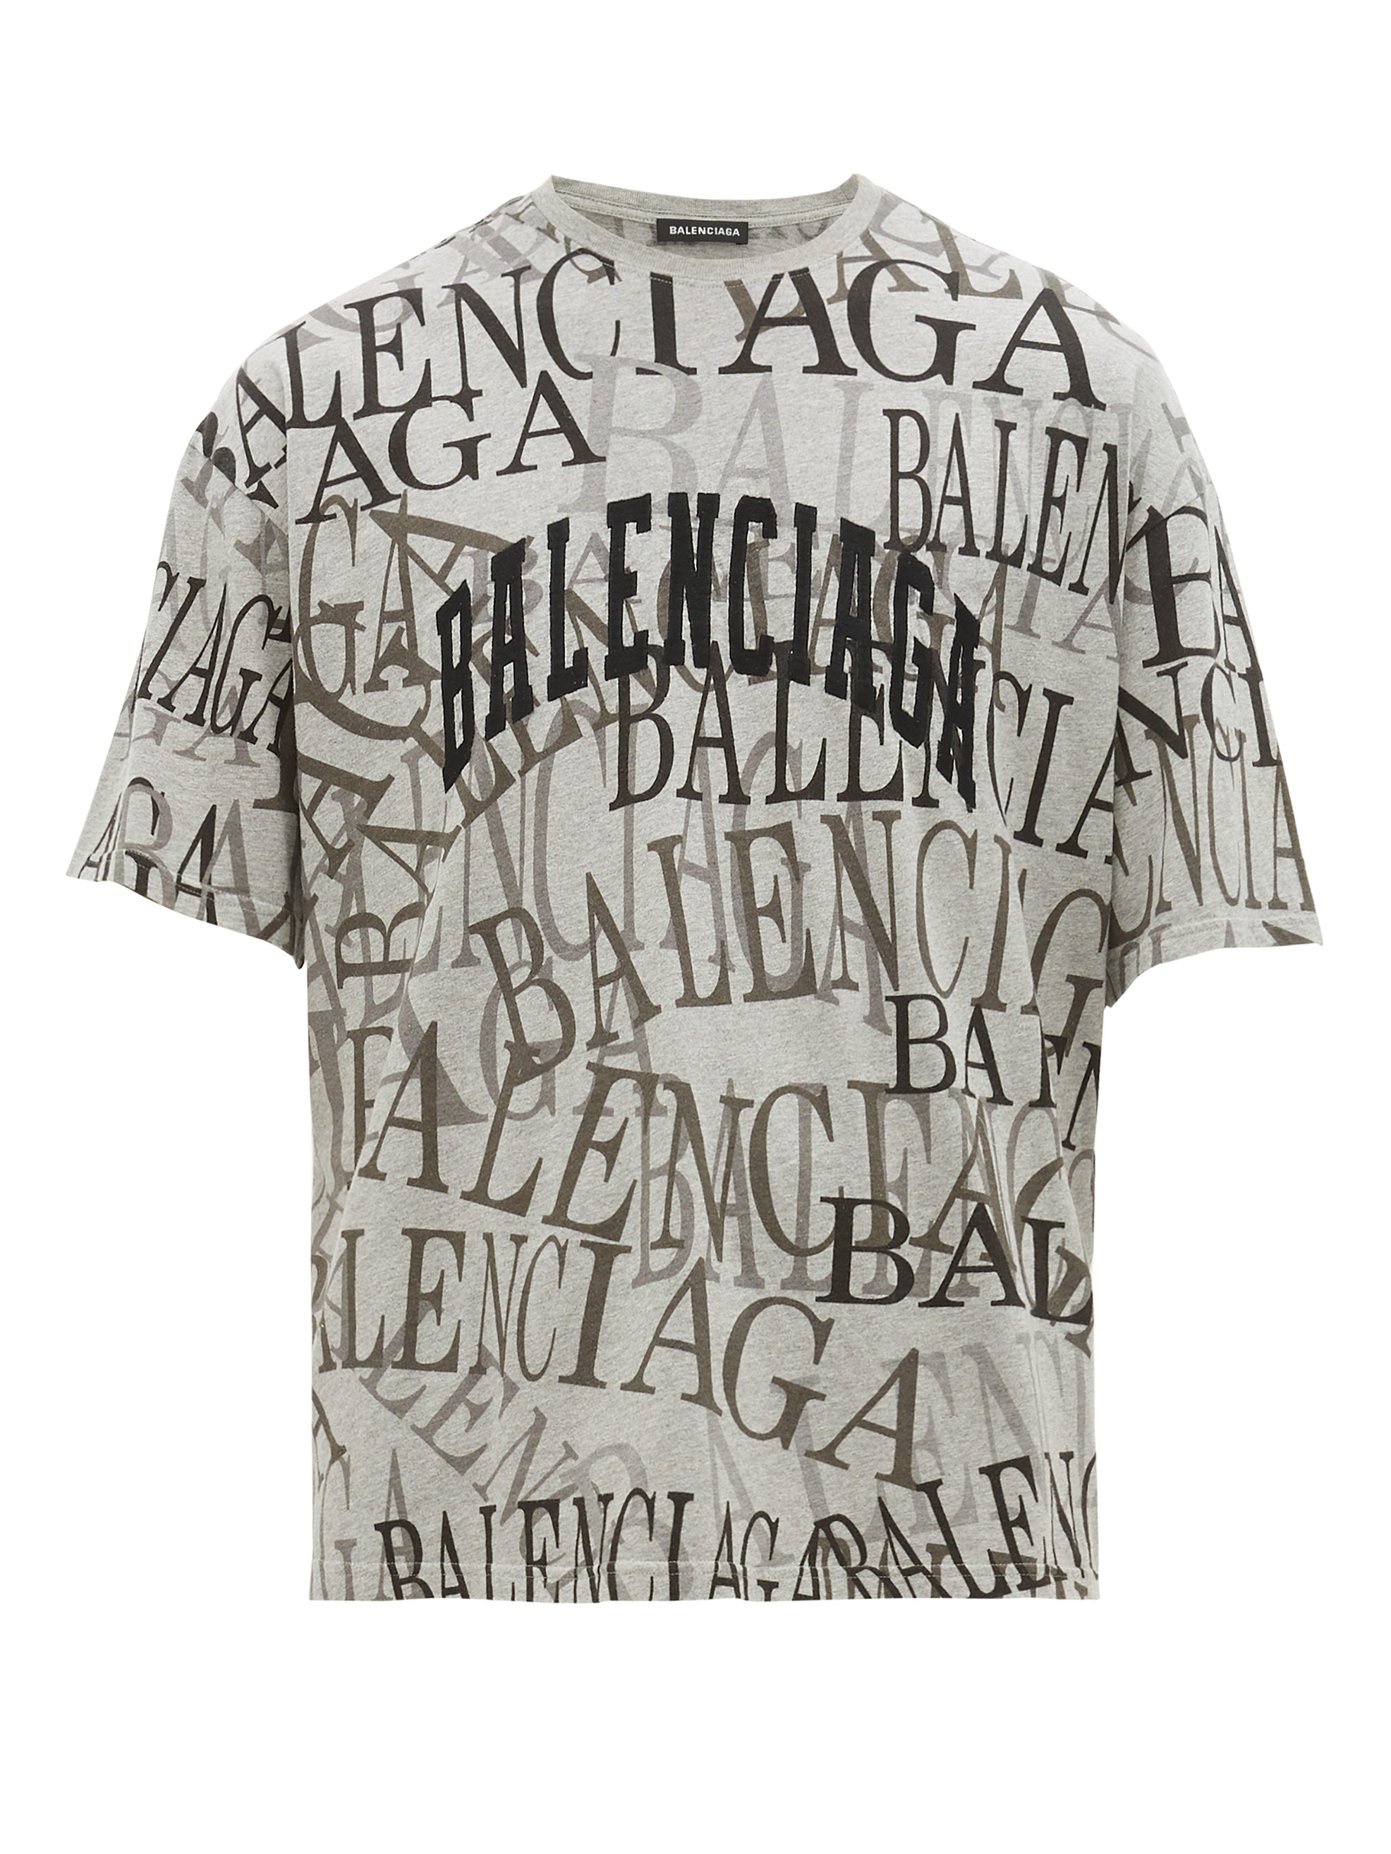 Balenciaga All Over Print Shirt White  Black  END Global